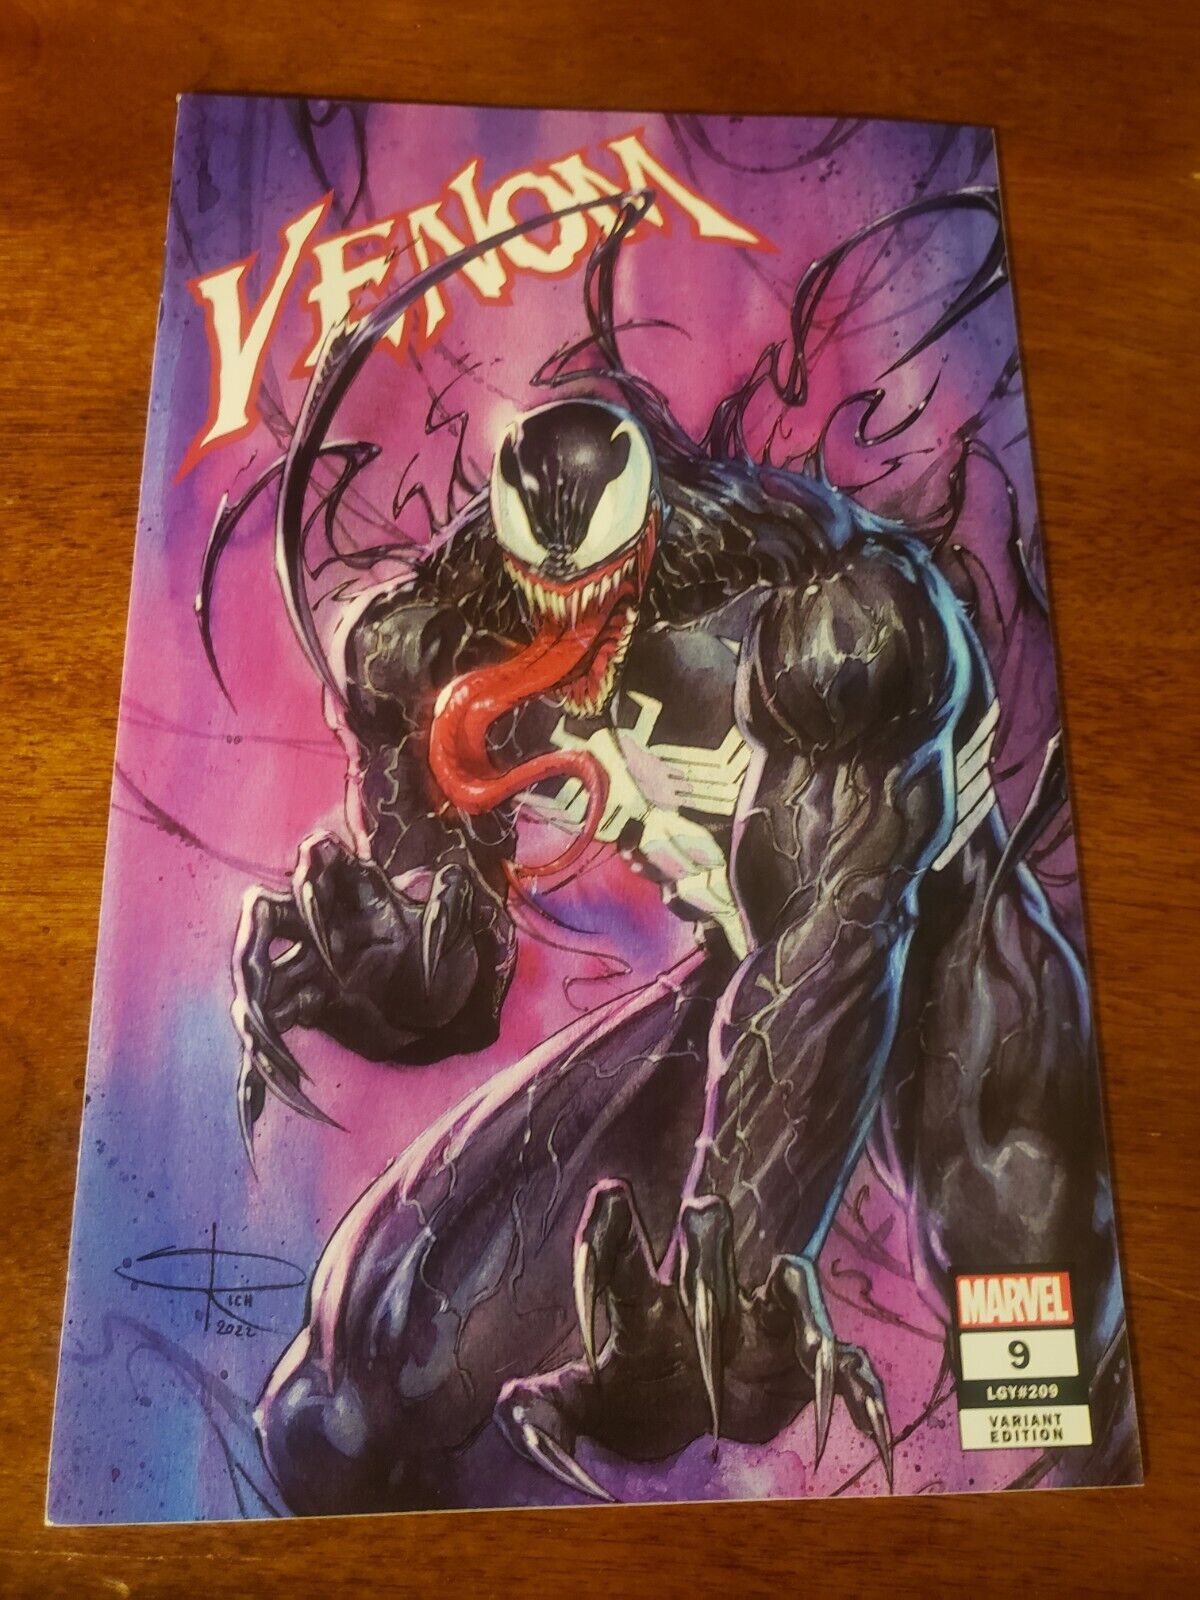 Venom 9 variant